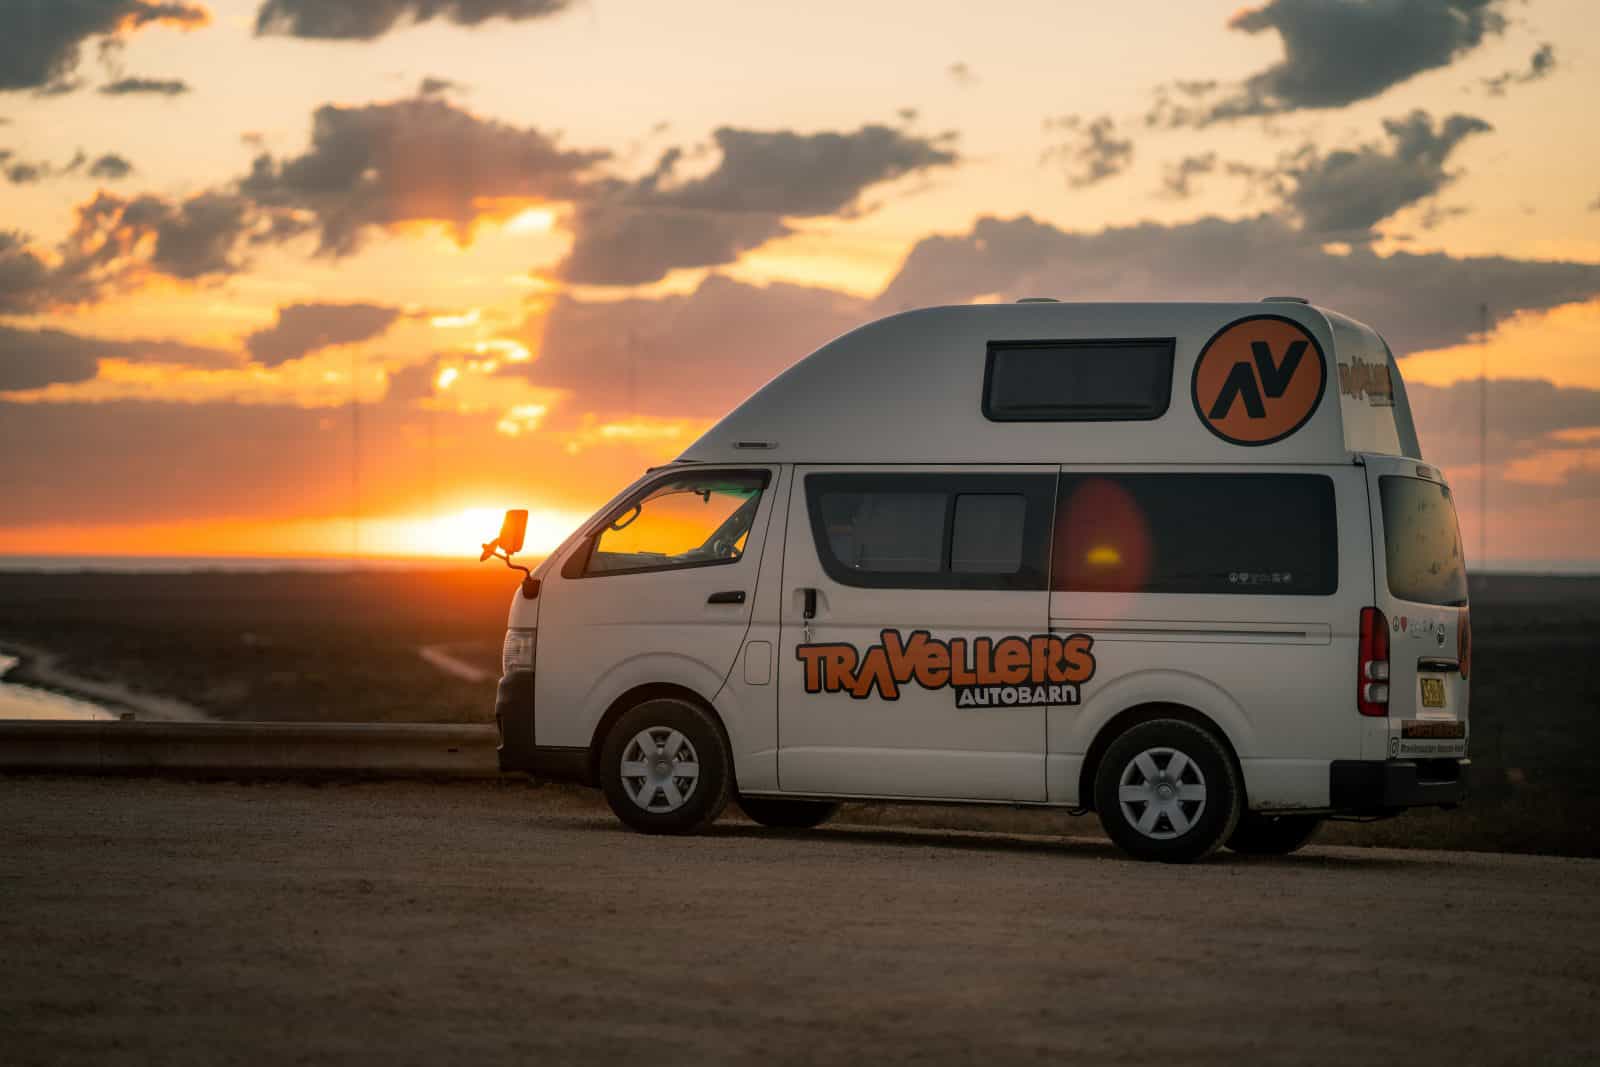 Travellers Autobarn, Welshpool, Western Australia